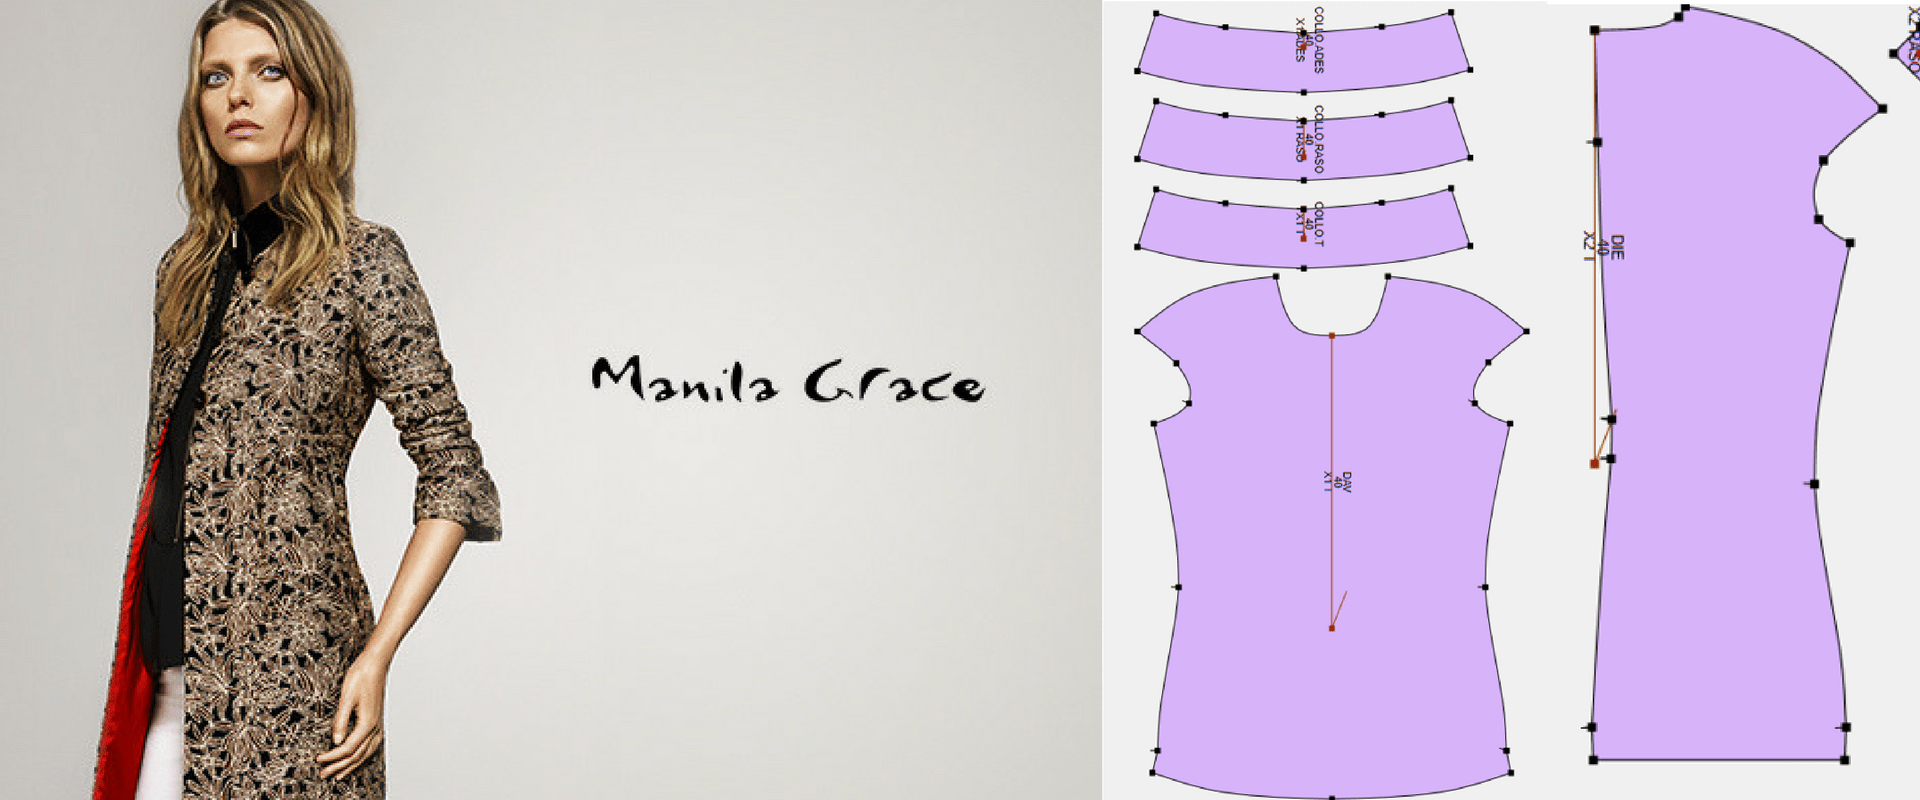 Manila grace chooses Crea Solution